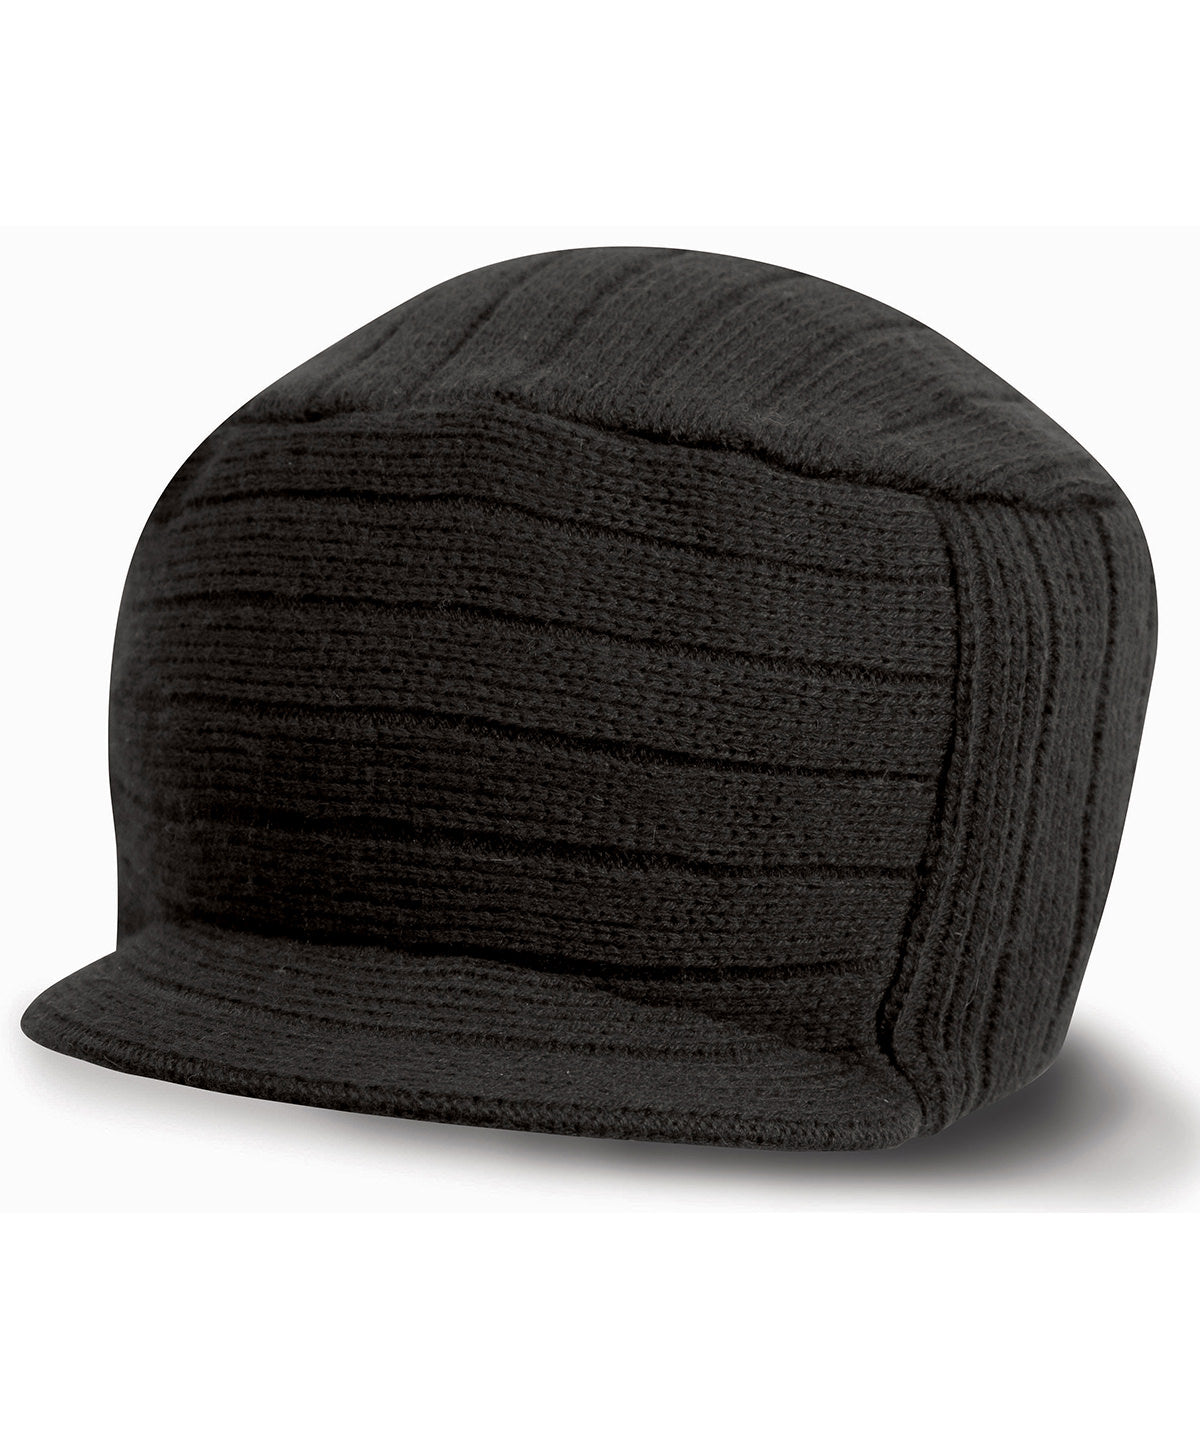 Húfur - Esco Urban Knitted Hat